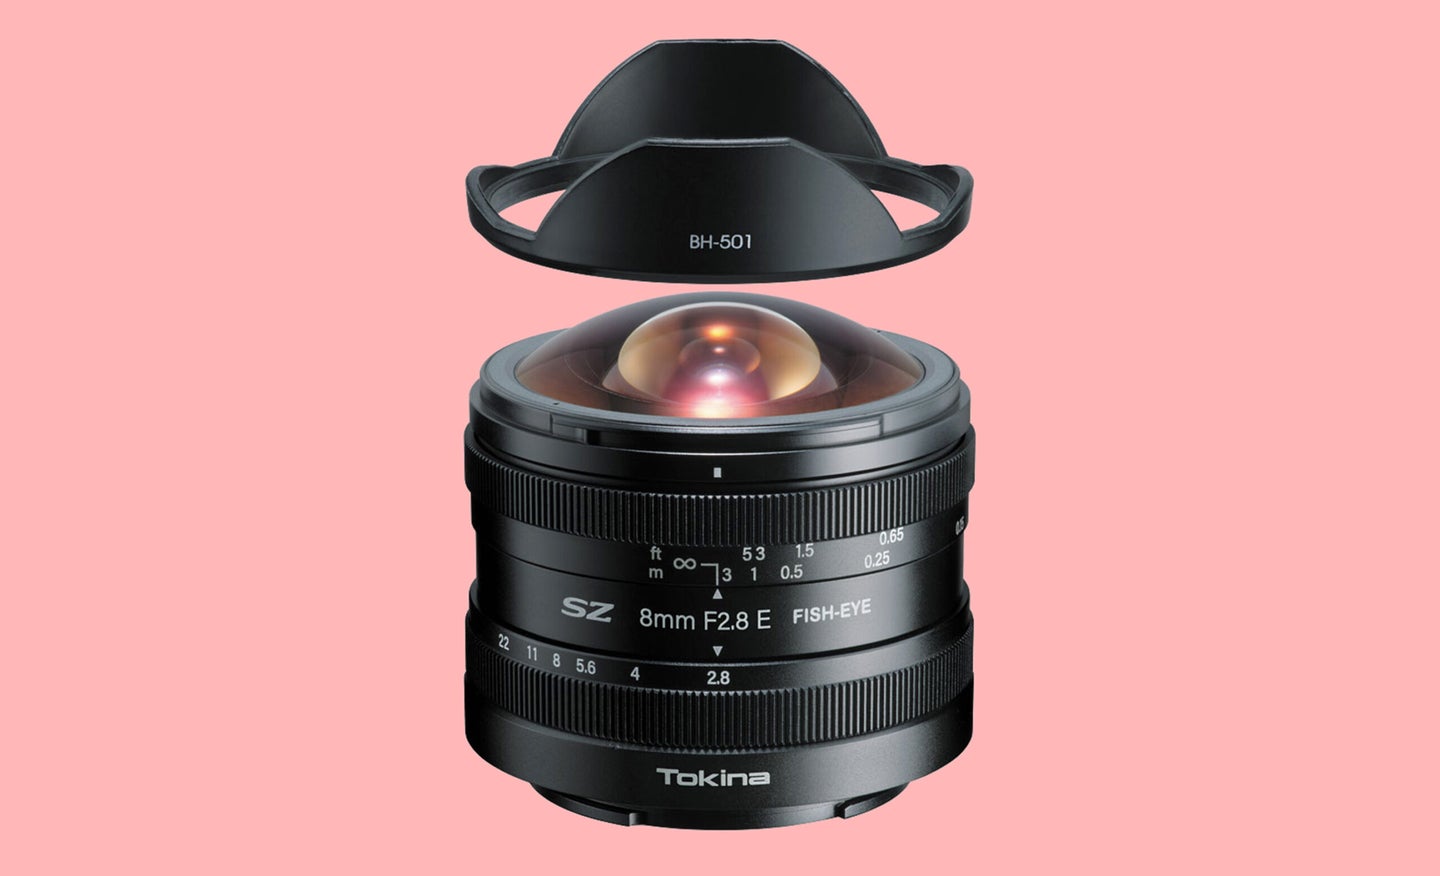 The new Tokina SZ 8mm f/2.8 fisheye lens.